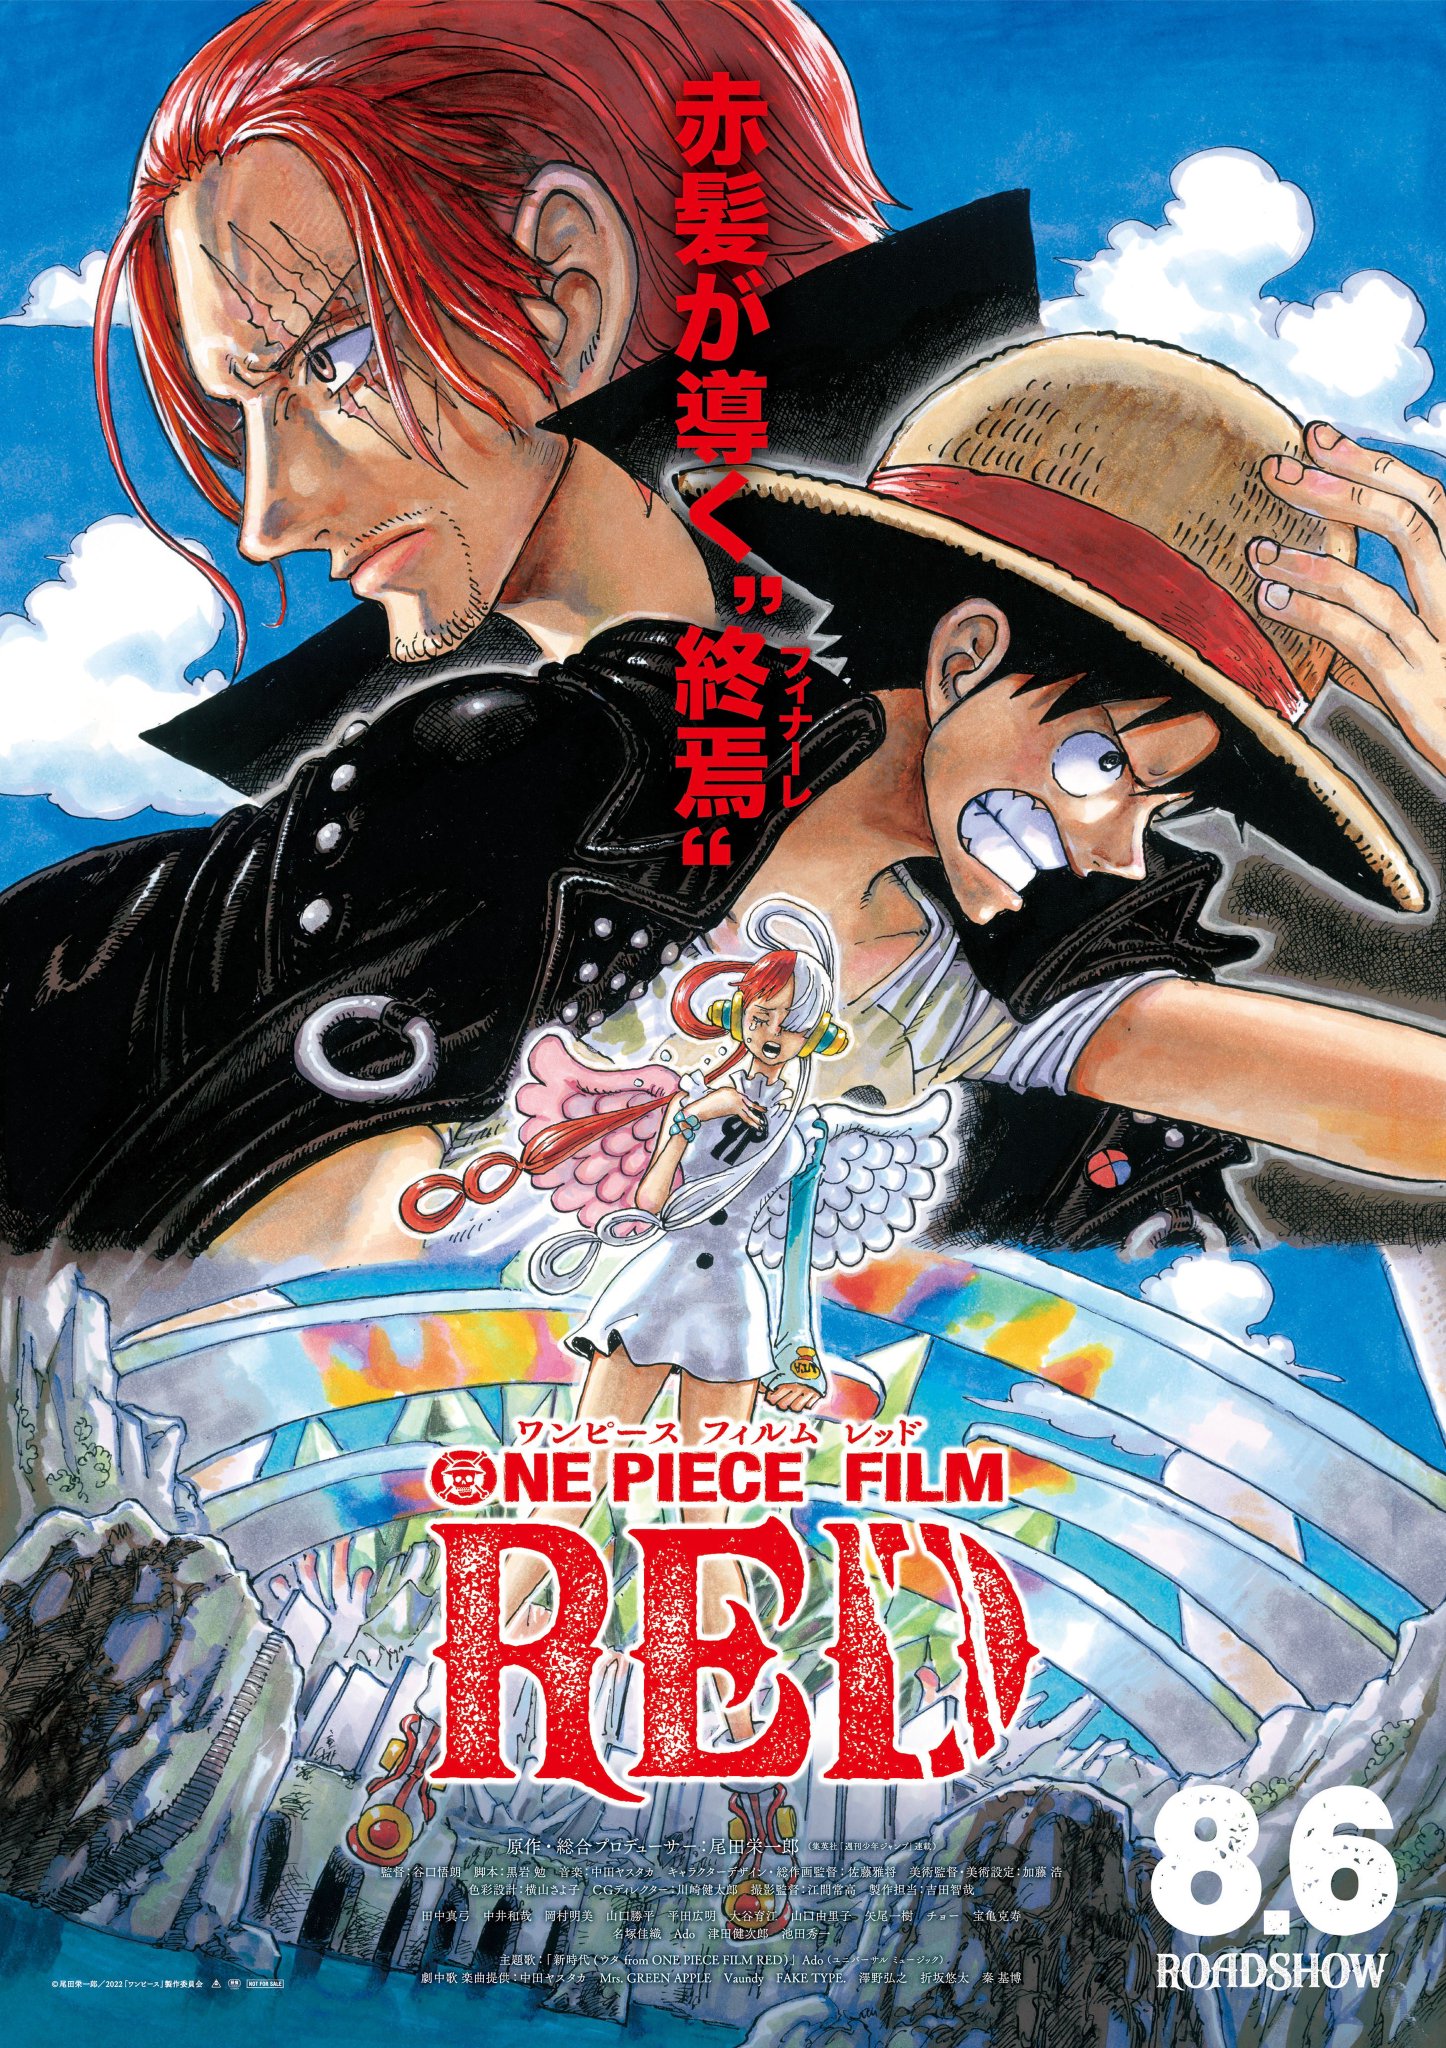 فيلم ون بيس ريد مترجم One Piece Red | XSAnime